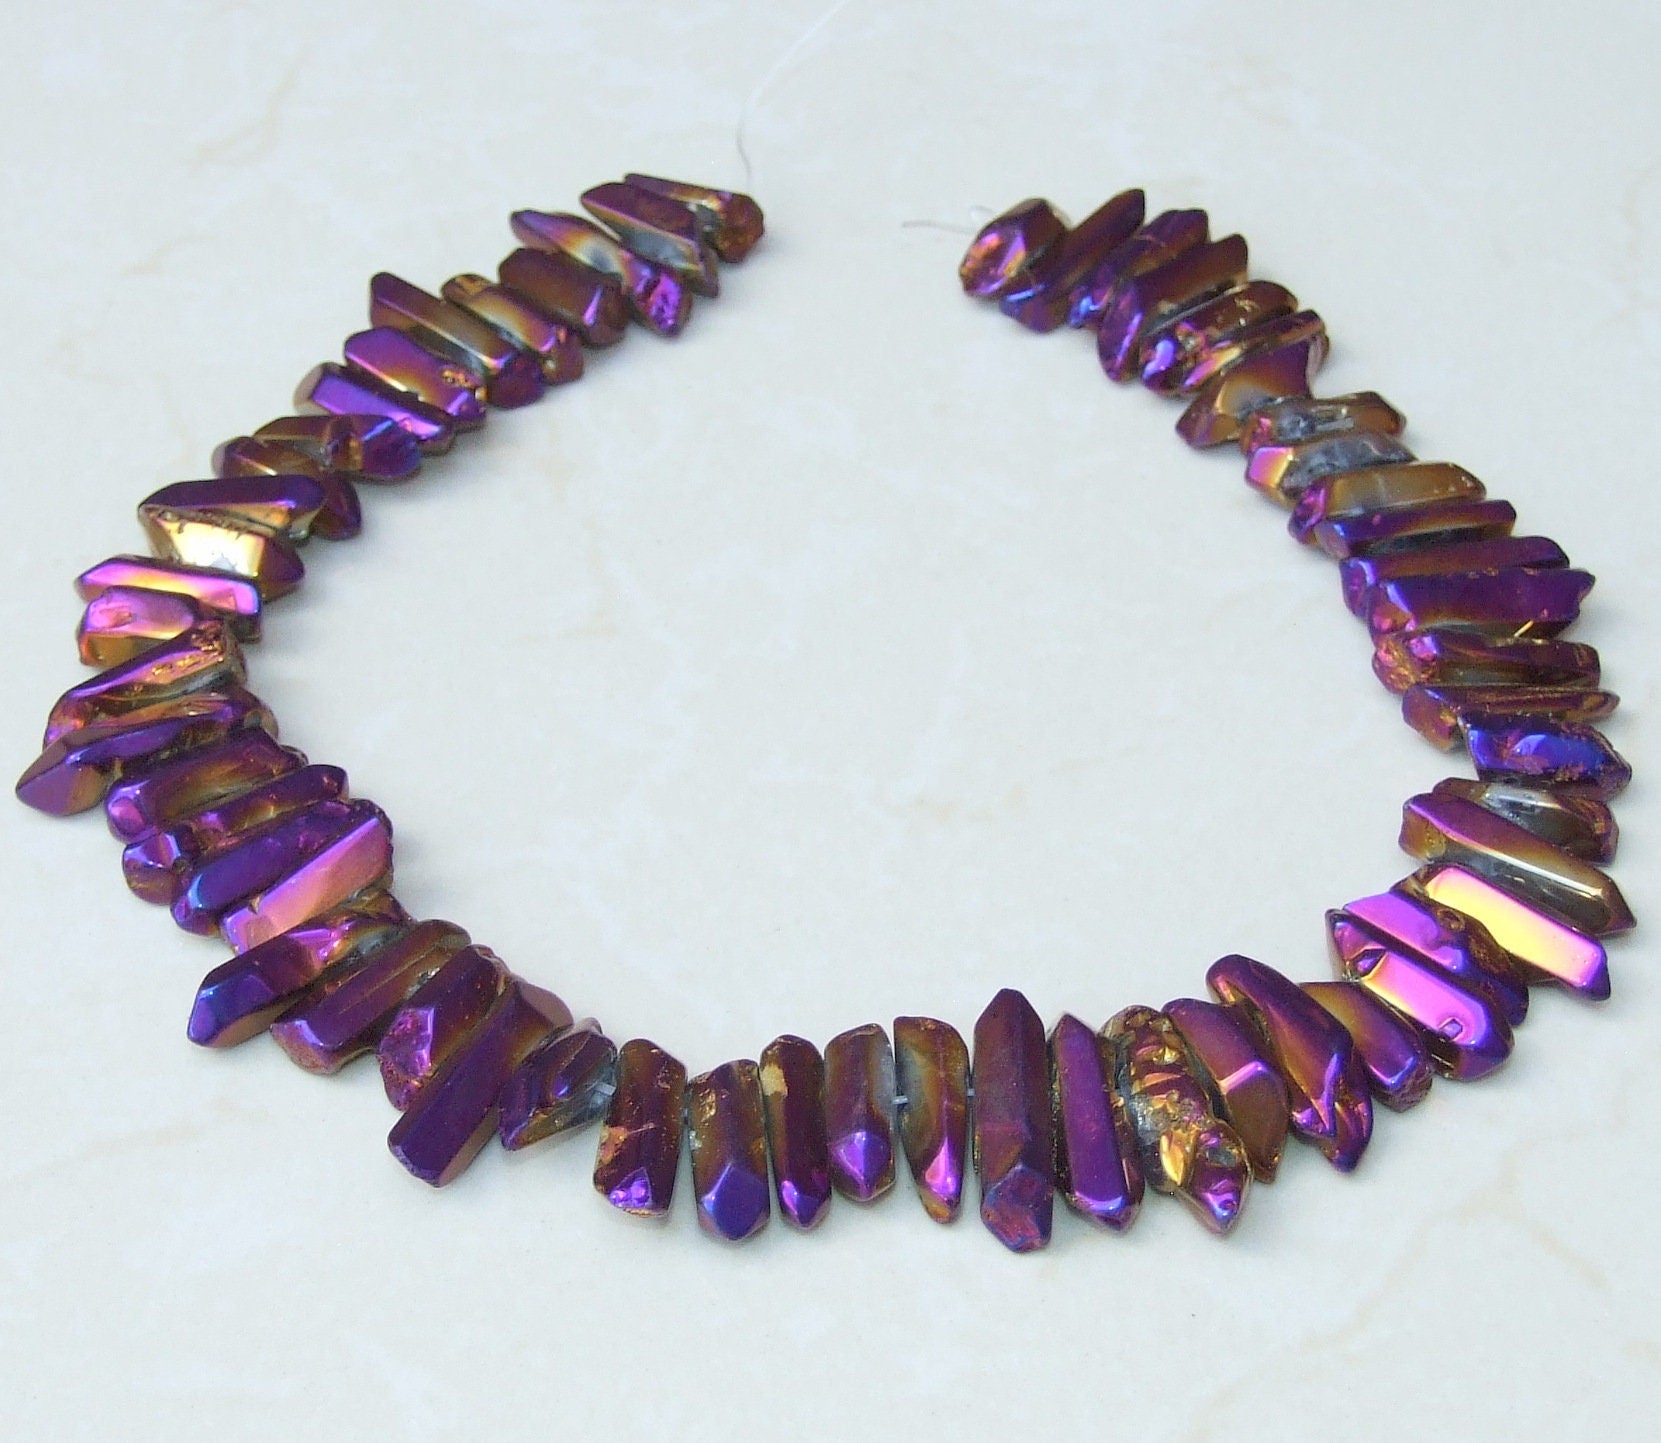 Polished Purple & Gold Titanium Quartz Points, Quartz Crystal, Crystals Points, Crystal Quartz, Mardi Gras - Gemstones Beads - 20mm - 28mm